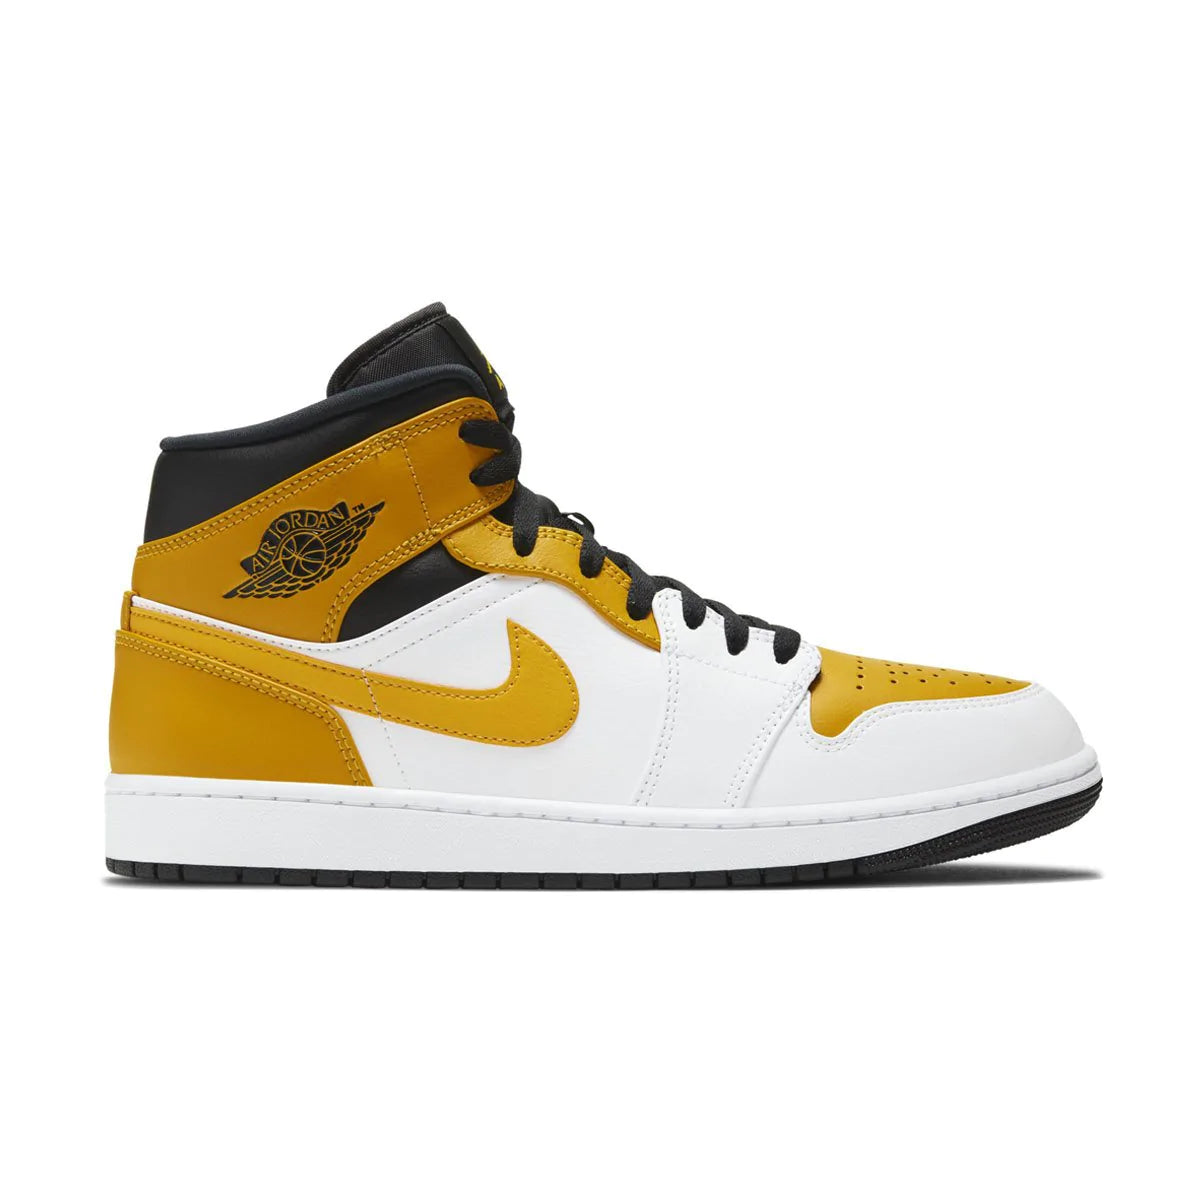 The Next Big Thing – Air Jordan 1 “Yellow Toe”